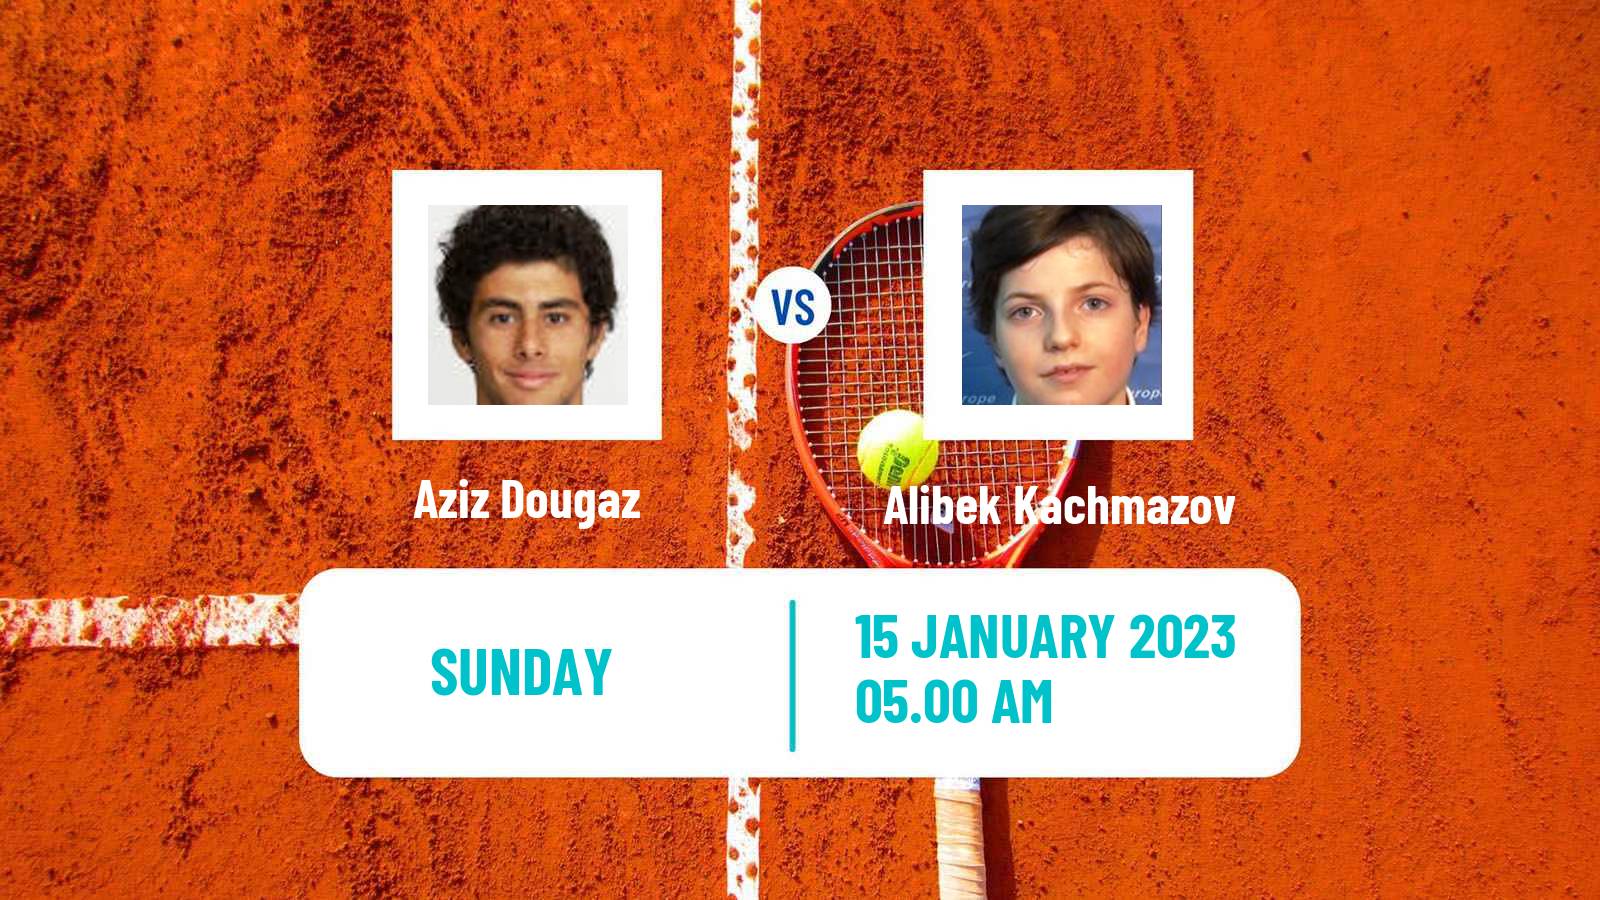 Tennis ATP Challenger Aziz Dougaz - Alibek Kachmazov